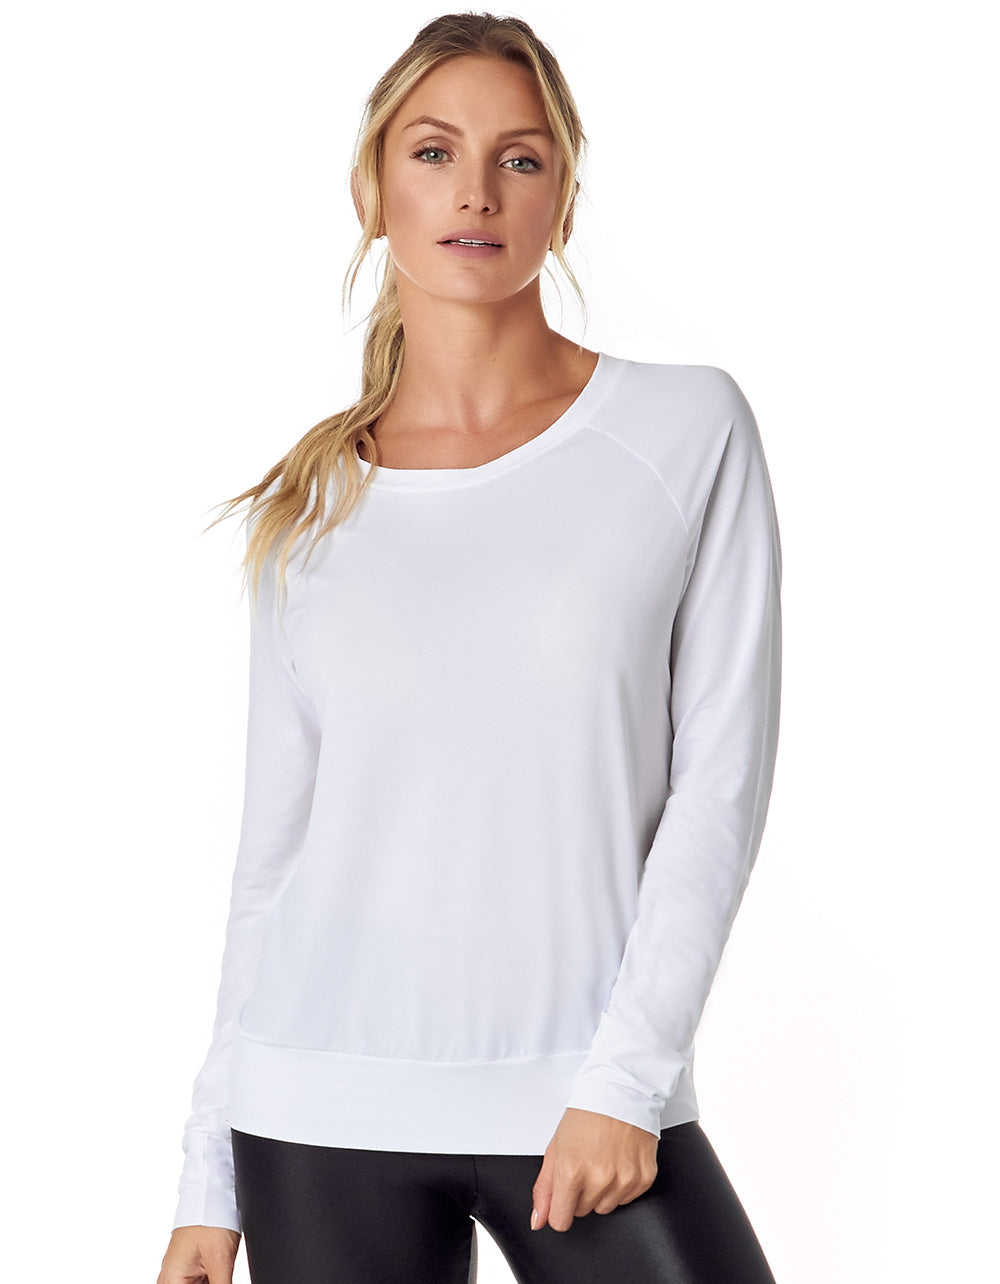 Vestem - Shirt Dry Fit Long Sleeve White Soul - BML155.C0001